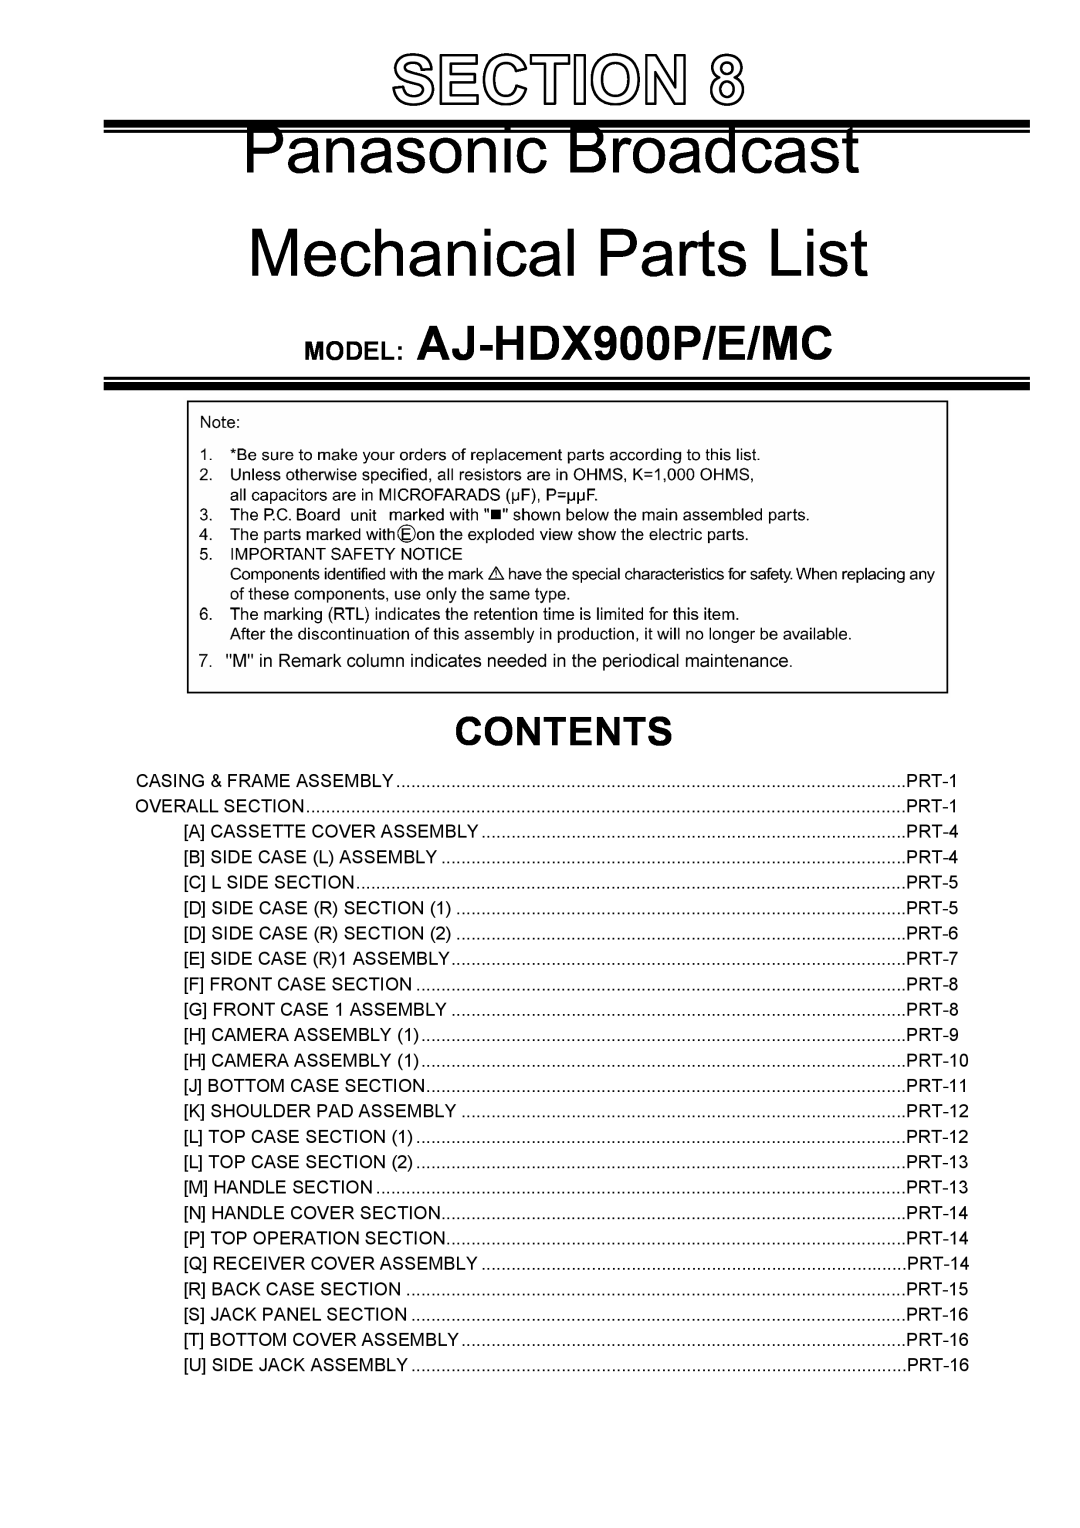 Panasonic AJ-HDX900MC manual Panasonic Broadcast Mechanical Parts List, MODEL AJ-HDX900P/E/MC, Contents 